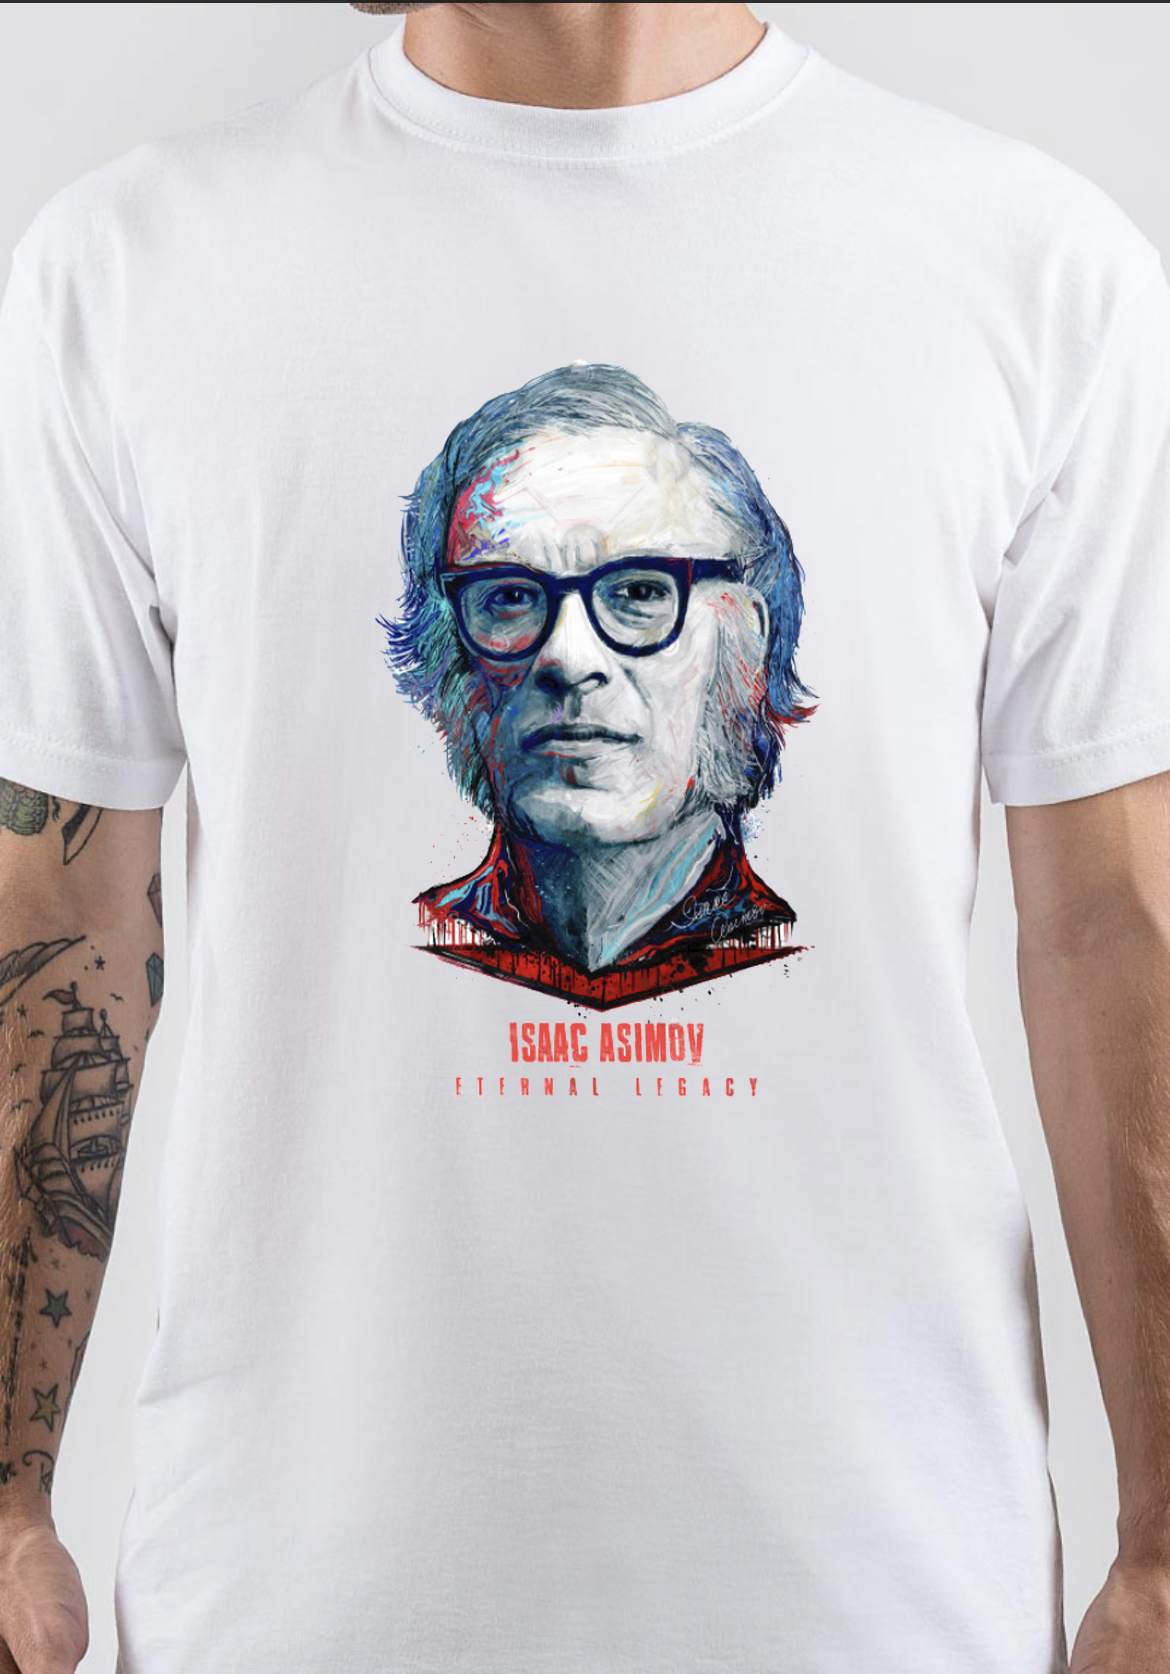 Isaac Asimov T-Shirt And Merchandise